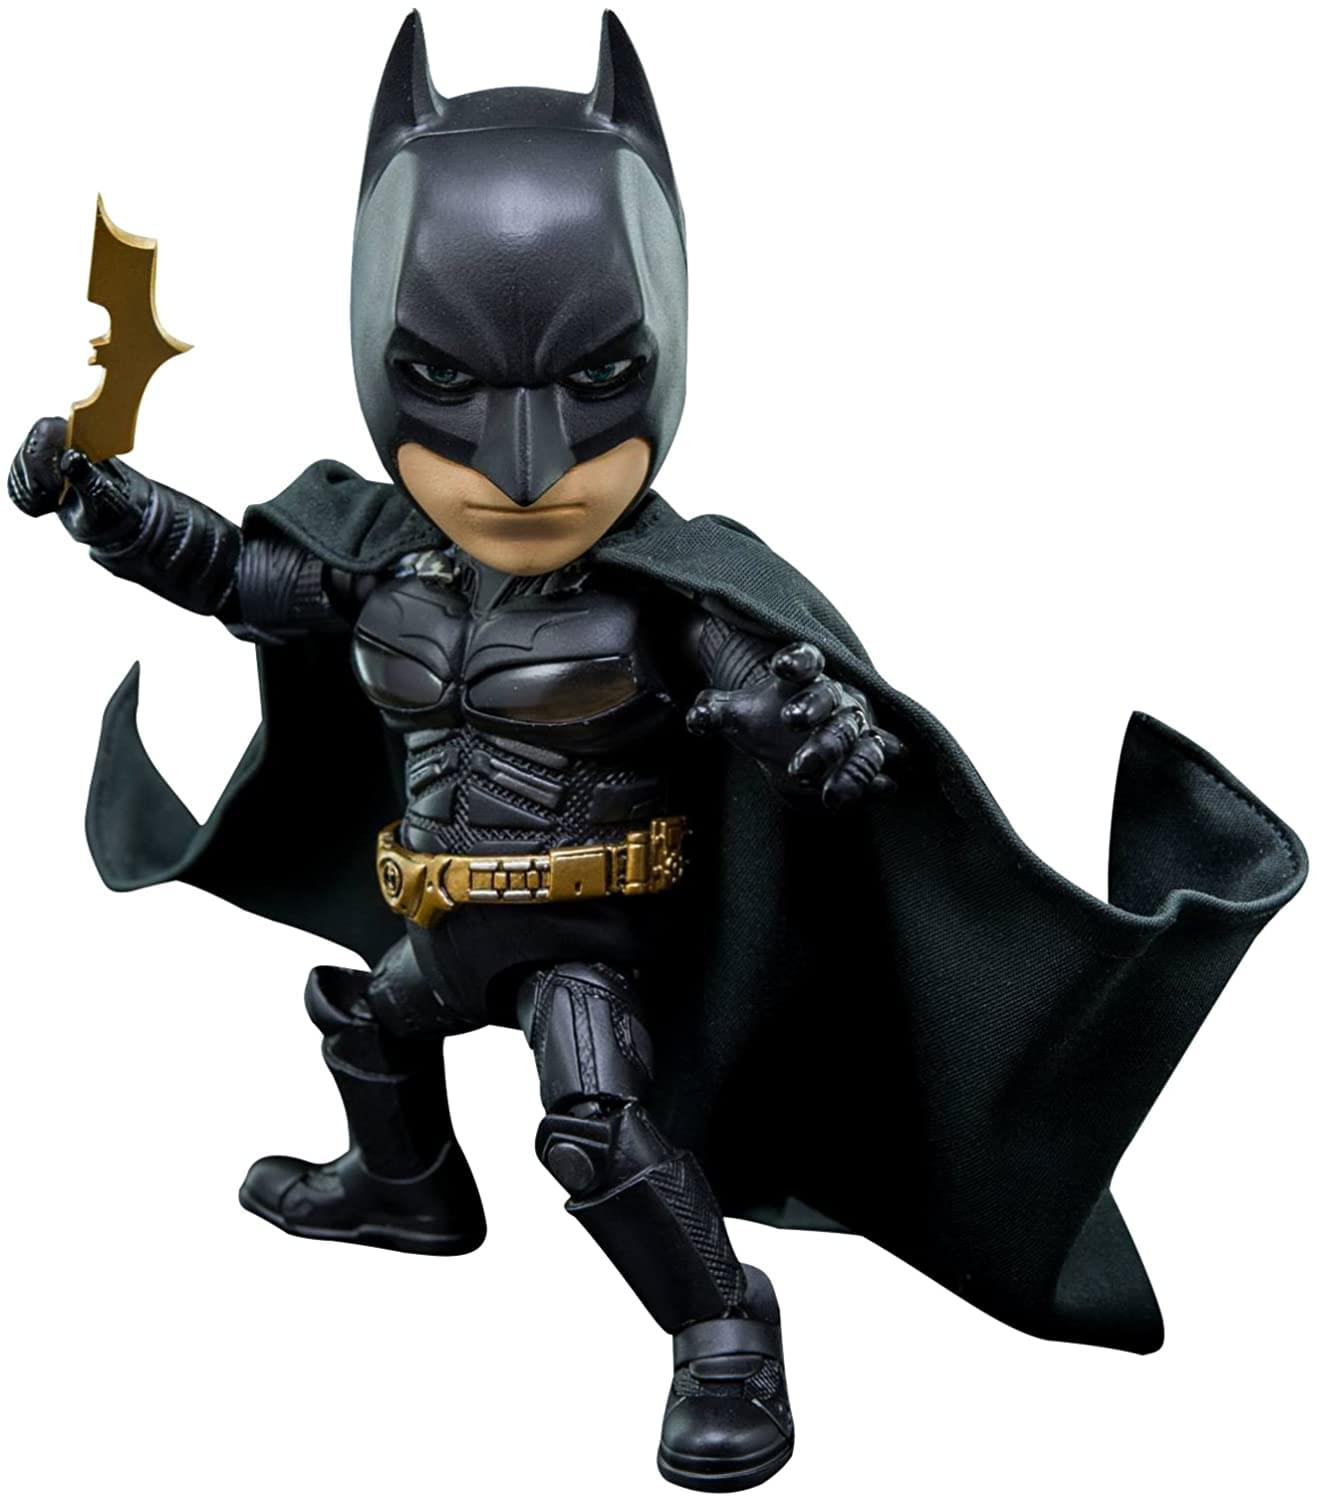 DC Comics Hybrid Metal Figuration Action Figure , Dark Knight Rises Batman